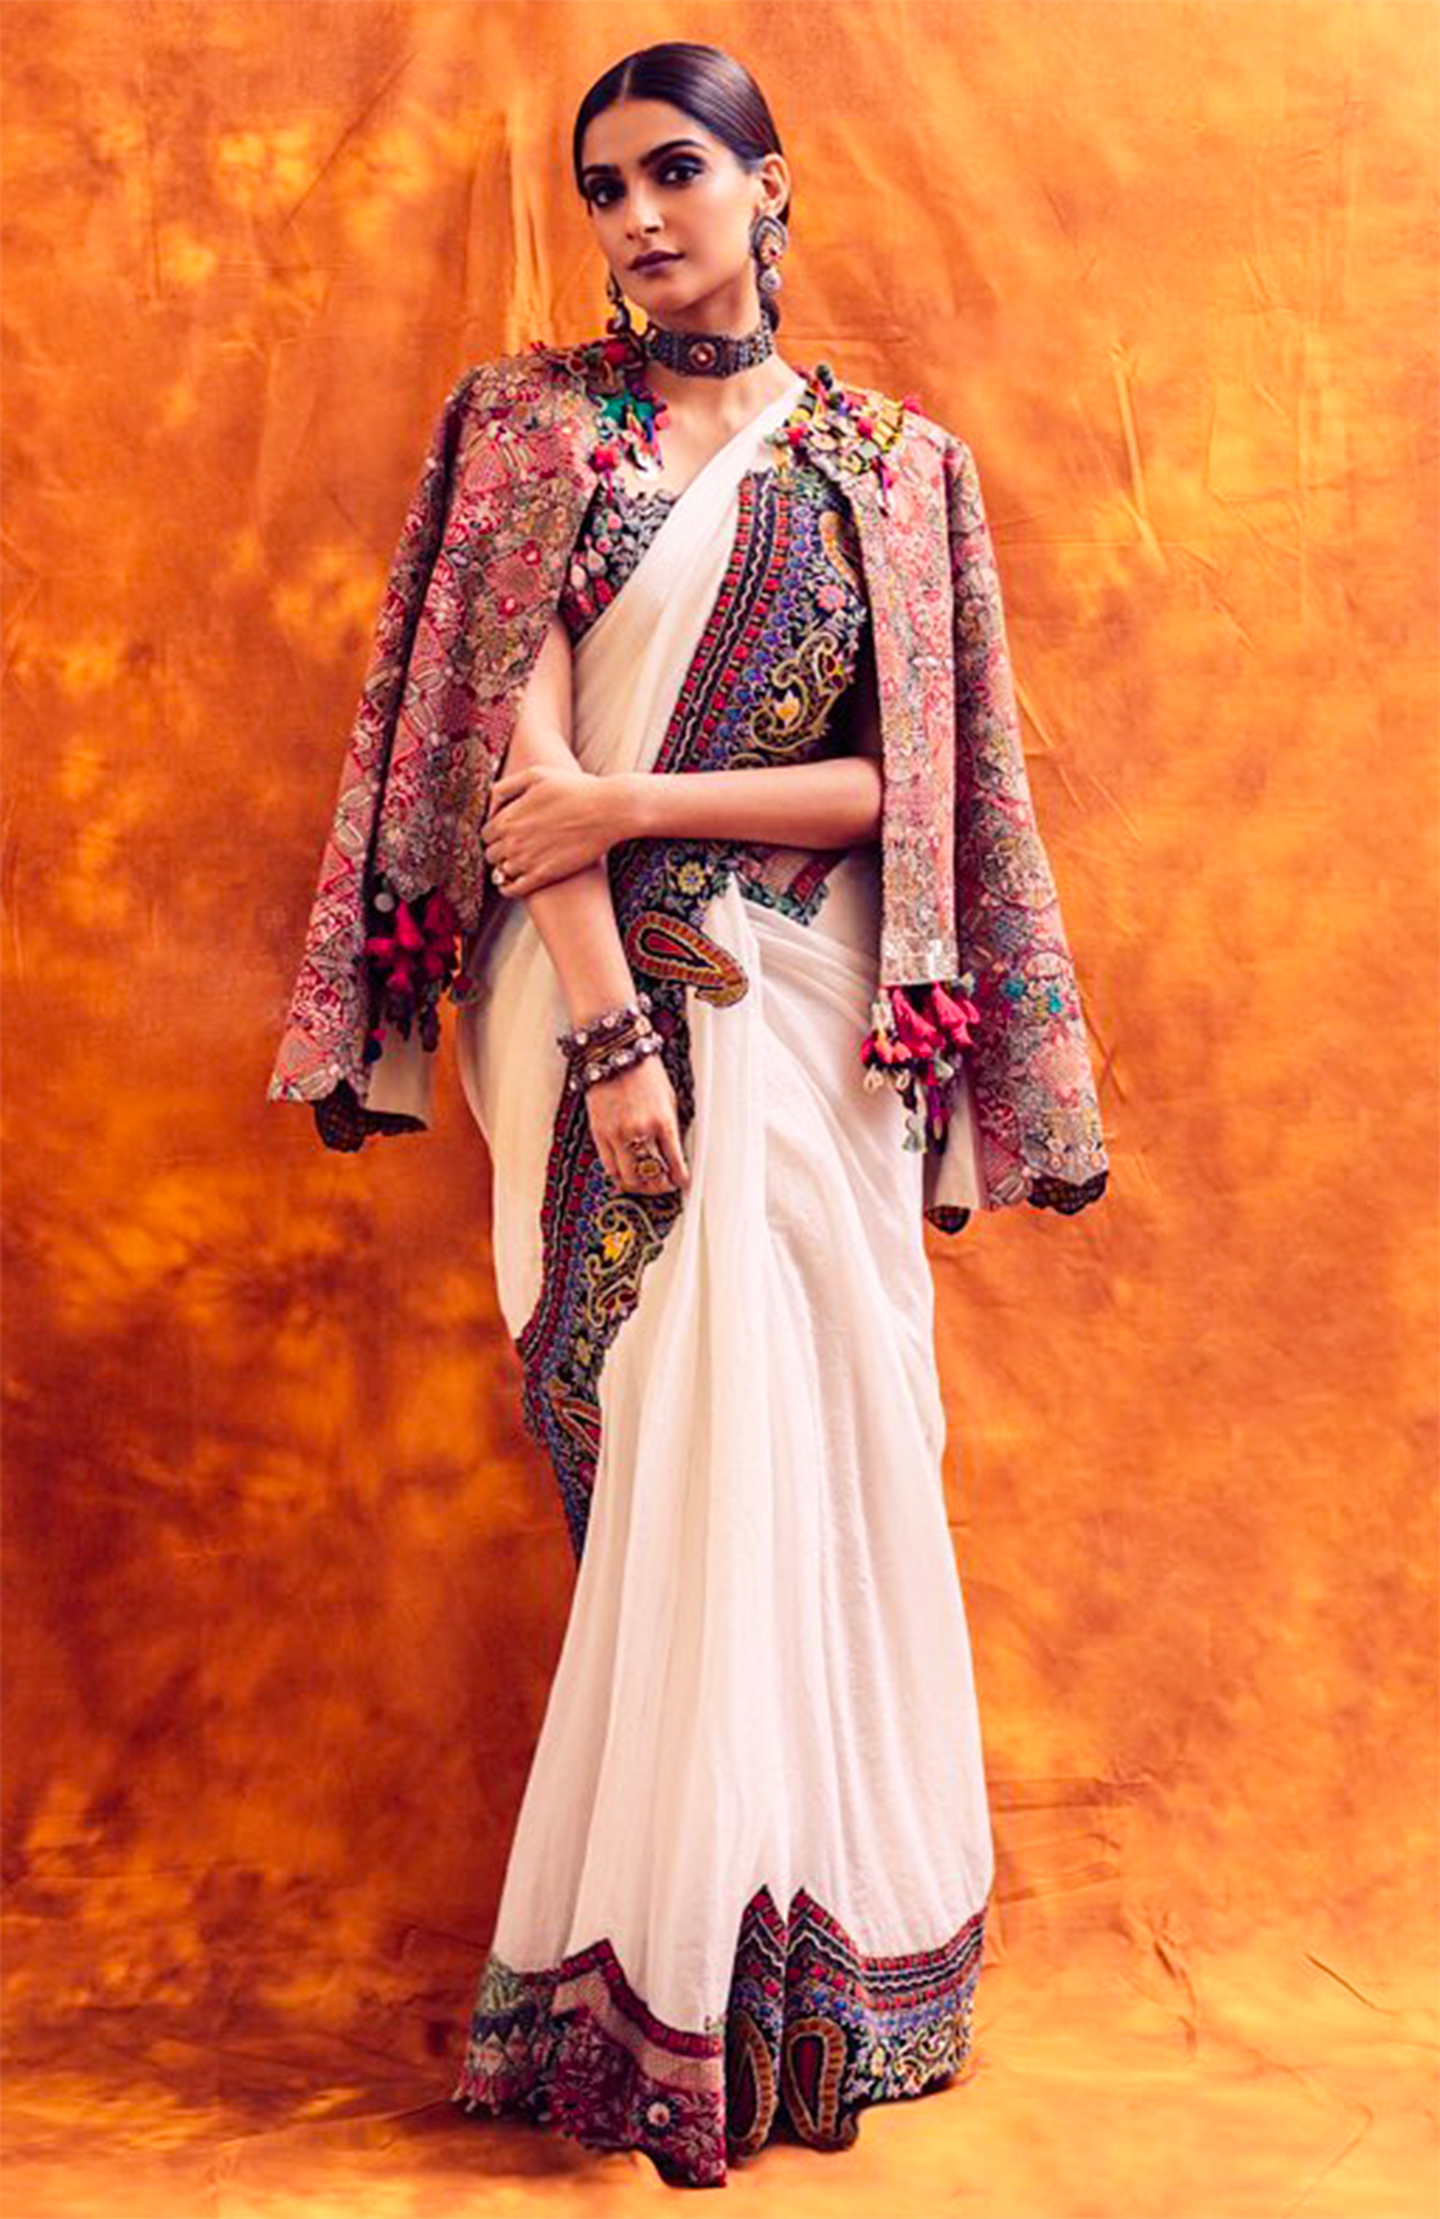 Sonam Kapoor Ahuja layered her Anamika Khanna white sari with a bohemian jacket. Image: Instagram.com, @sonamkapoor